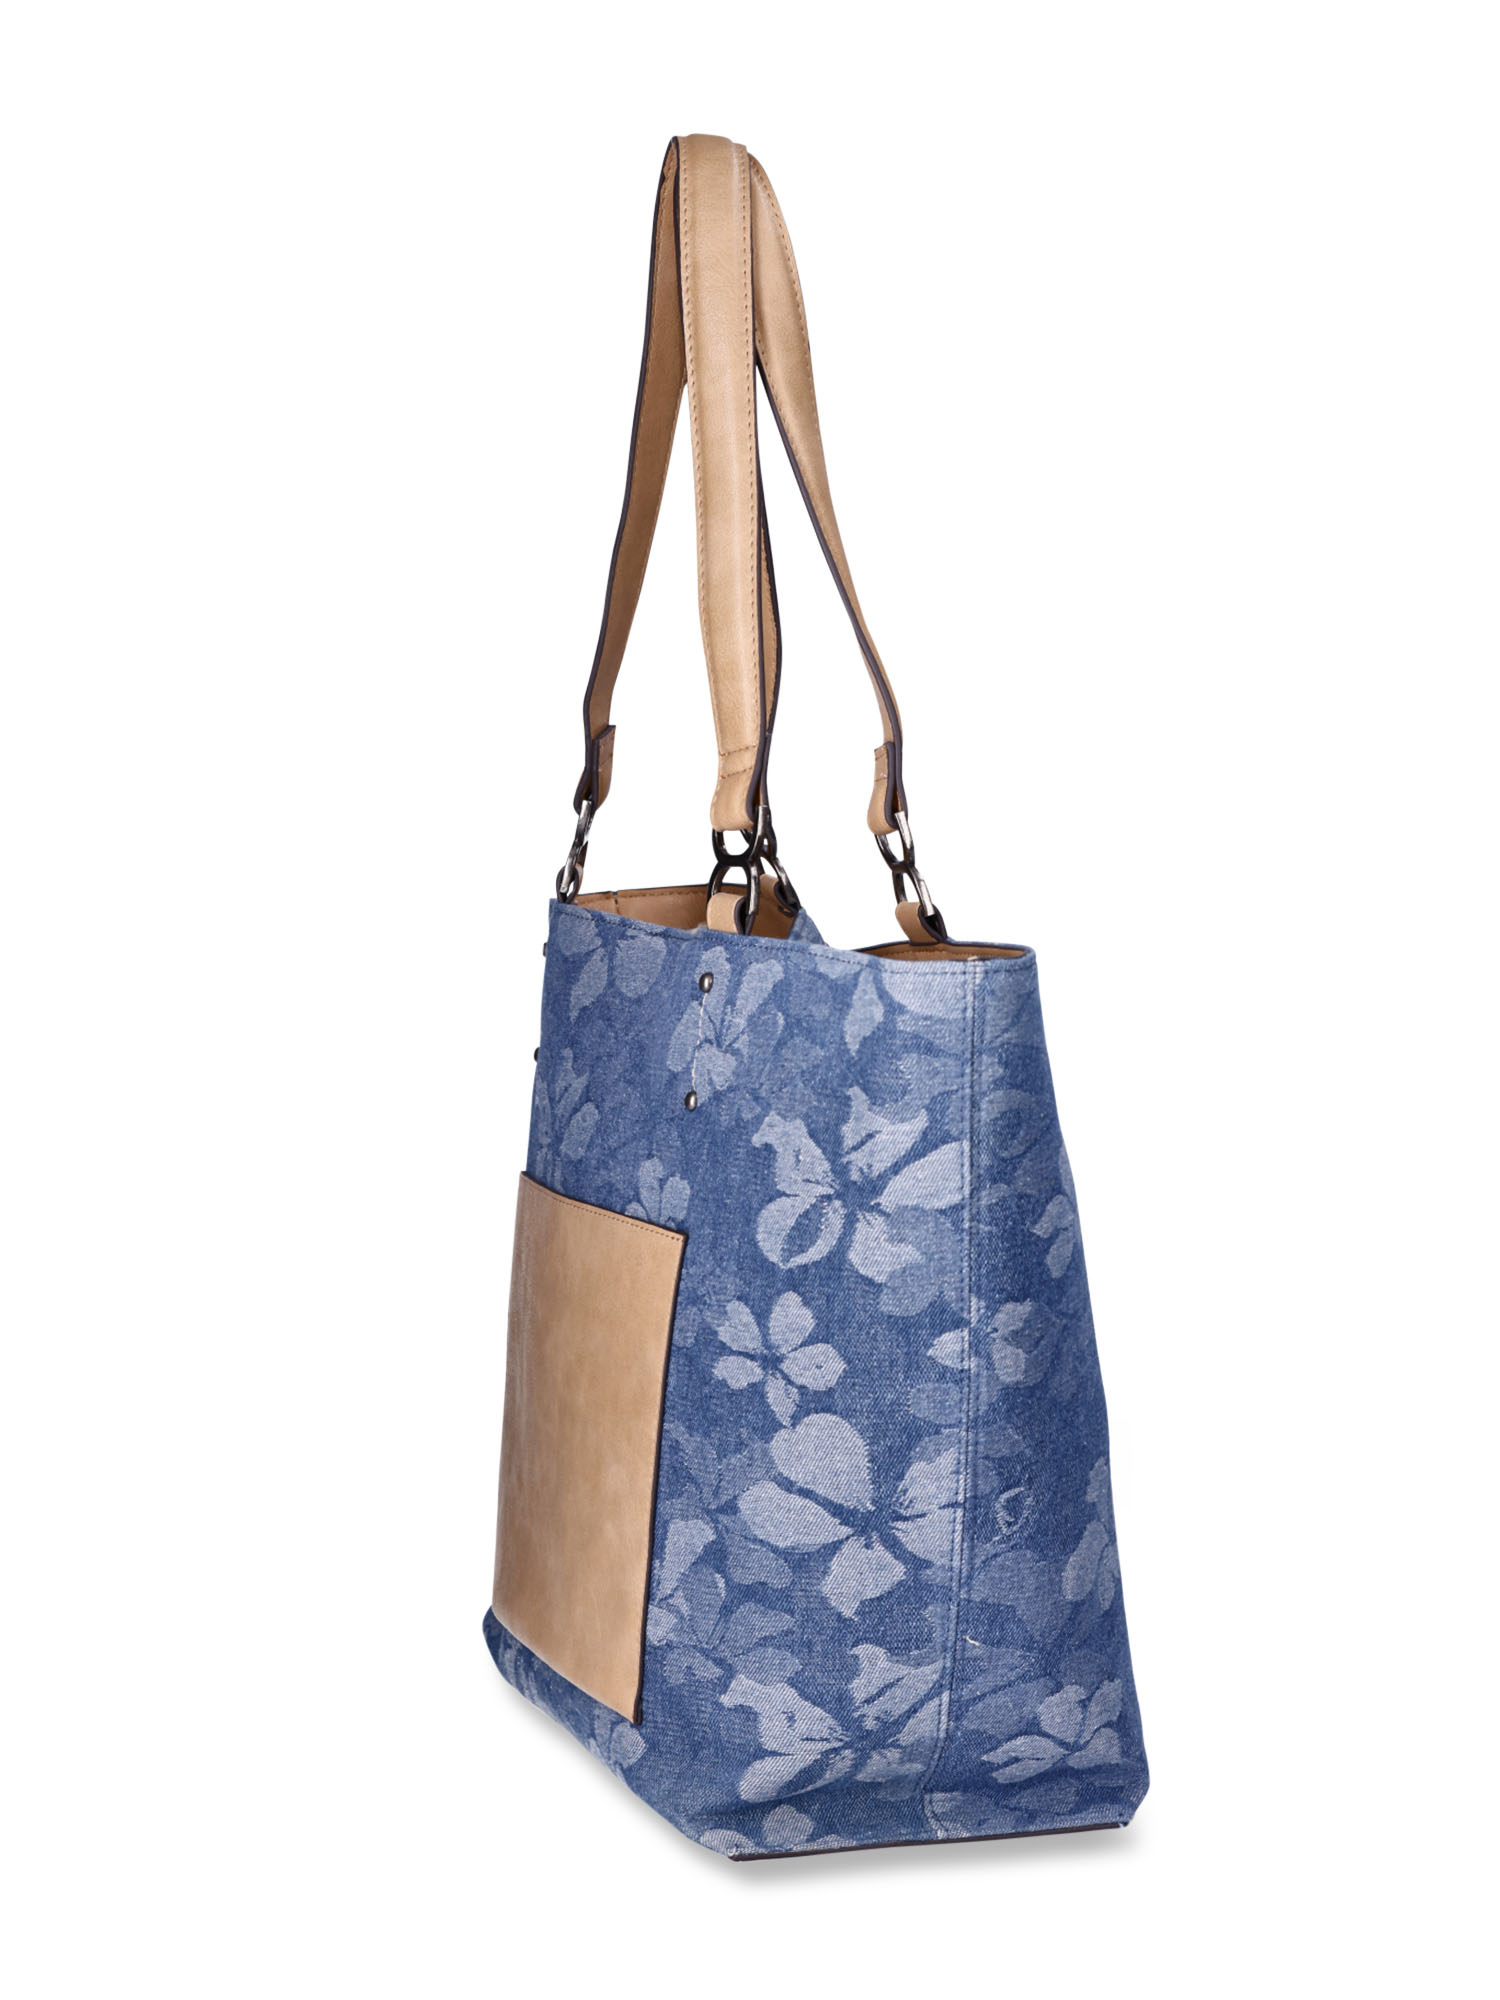 Wrangler Tote Bags for Women Designer Satchel Handbags Top-handle Purses  with Strap - Walmart.com